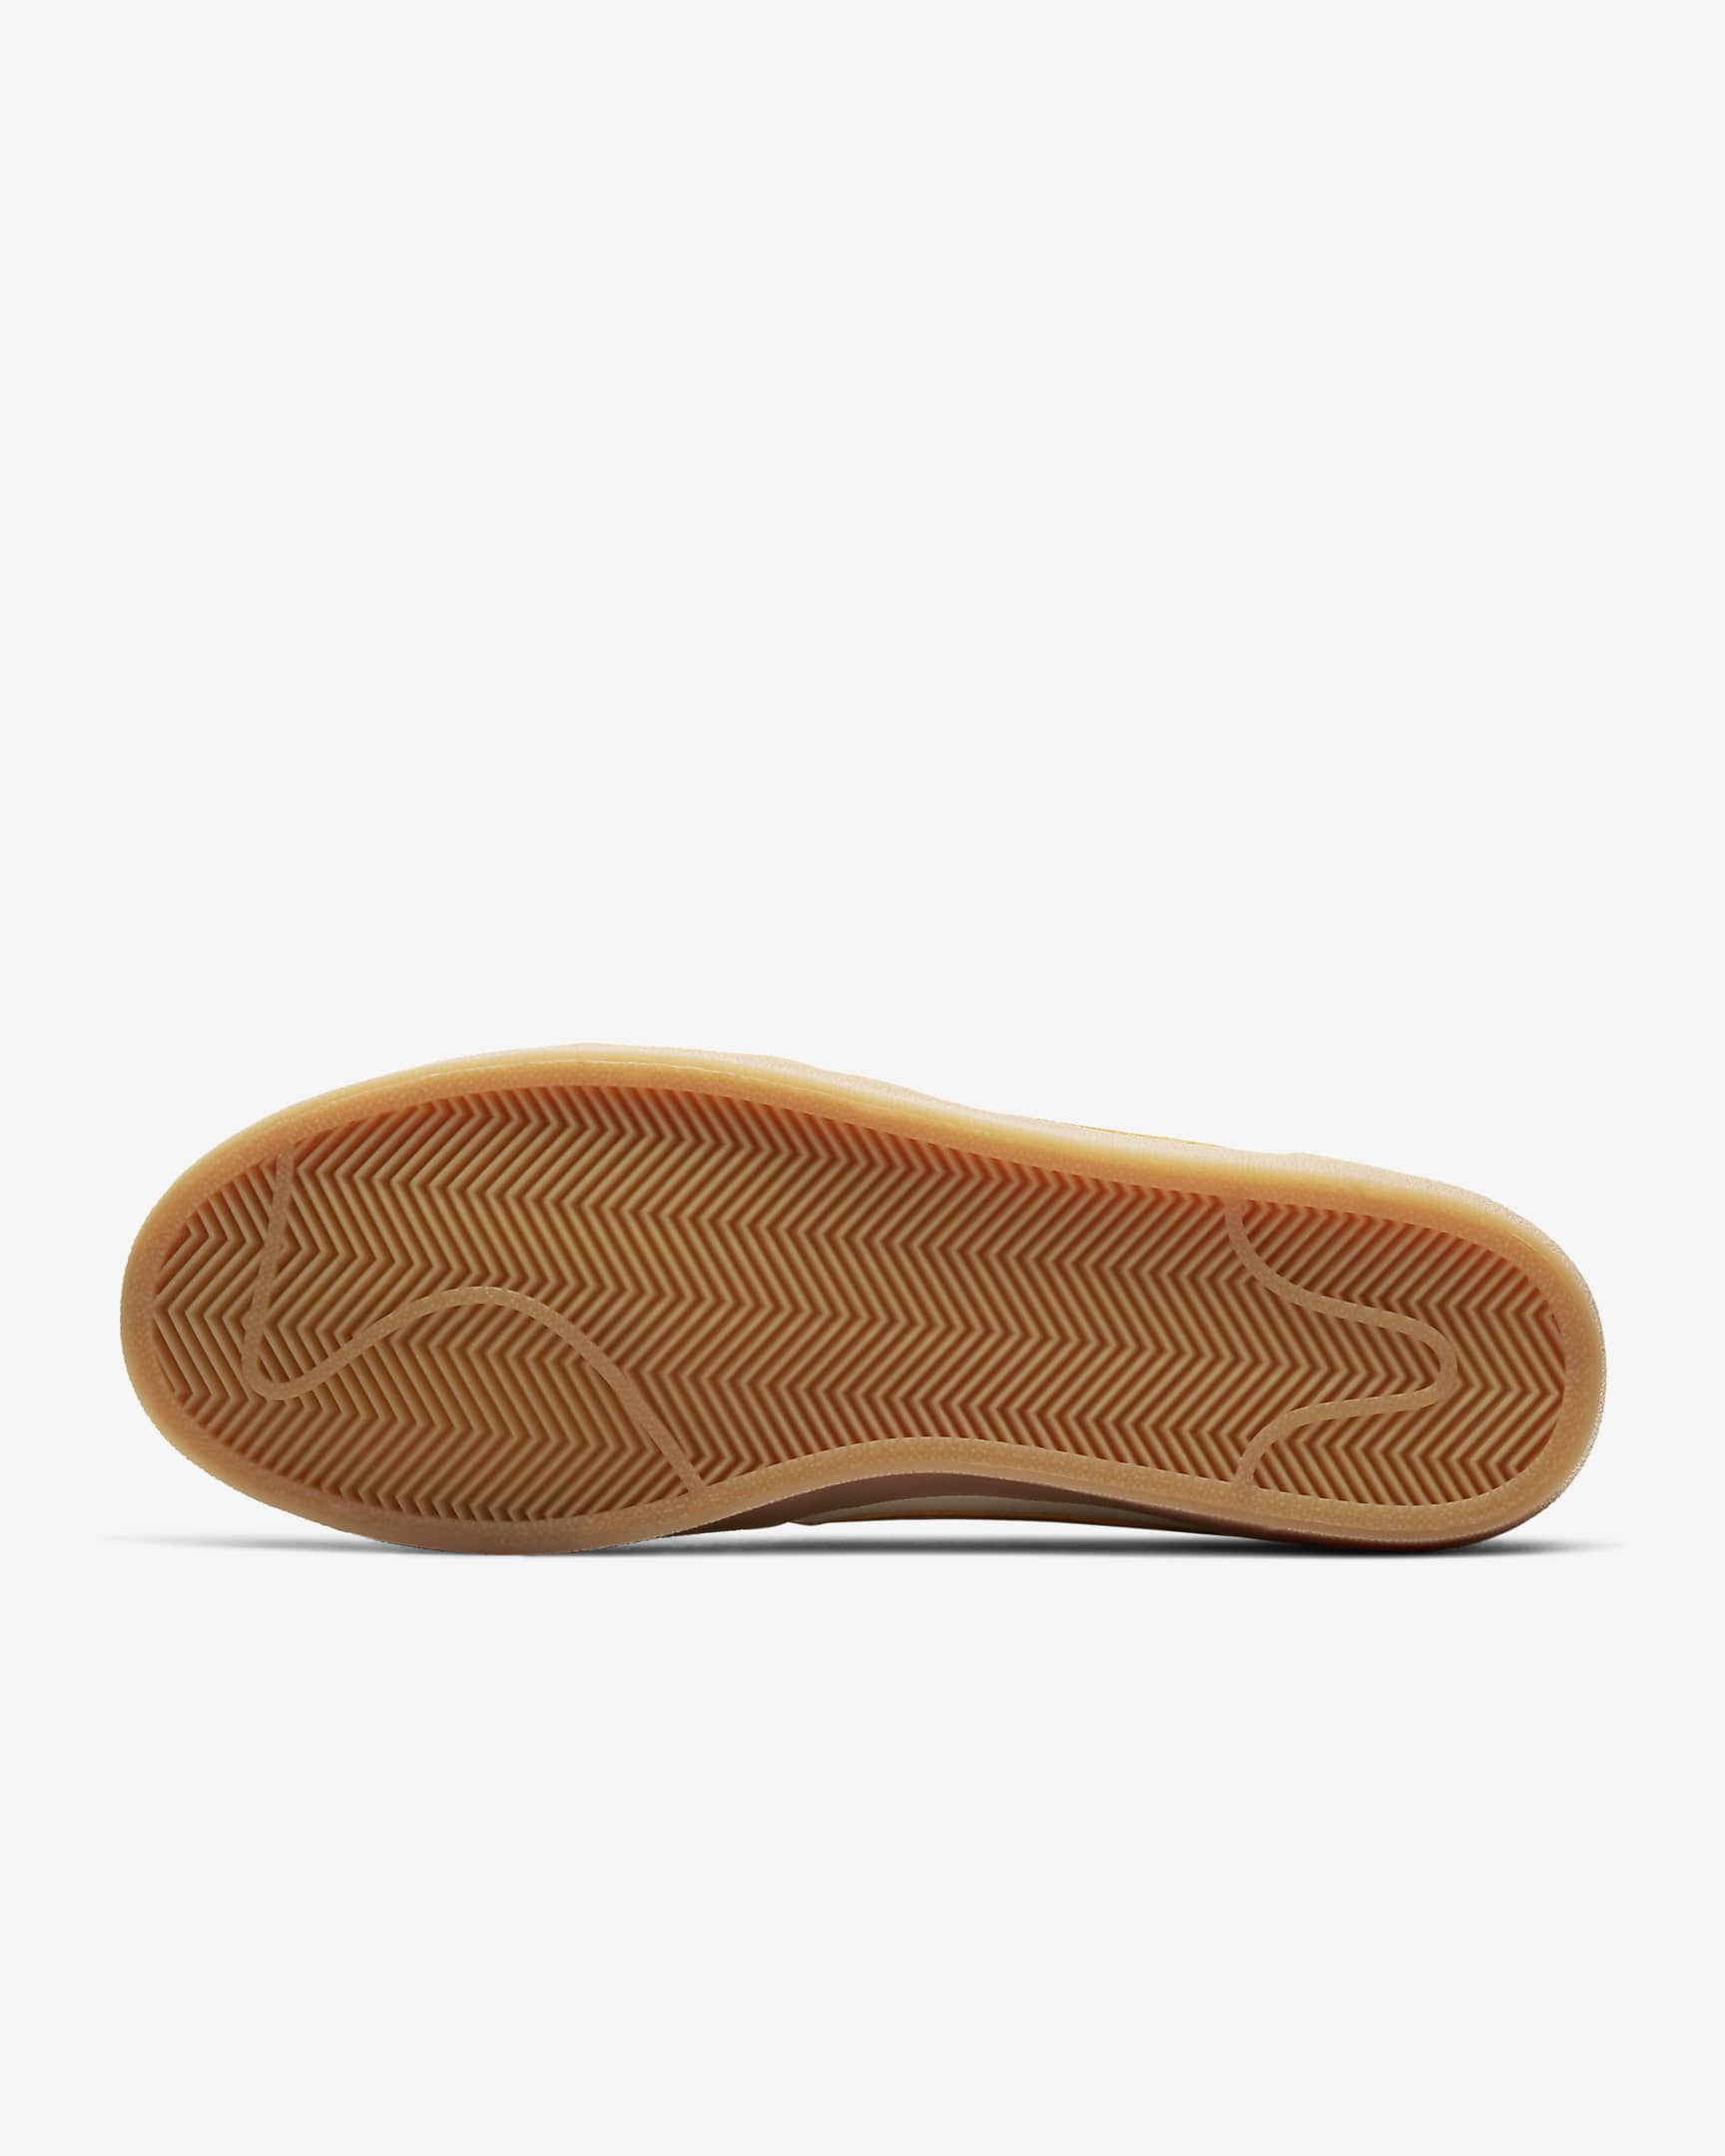 Nike Killshot 2 Leather Men's Shoes - Sail/Gum Yellow/Desert Orange